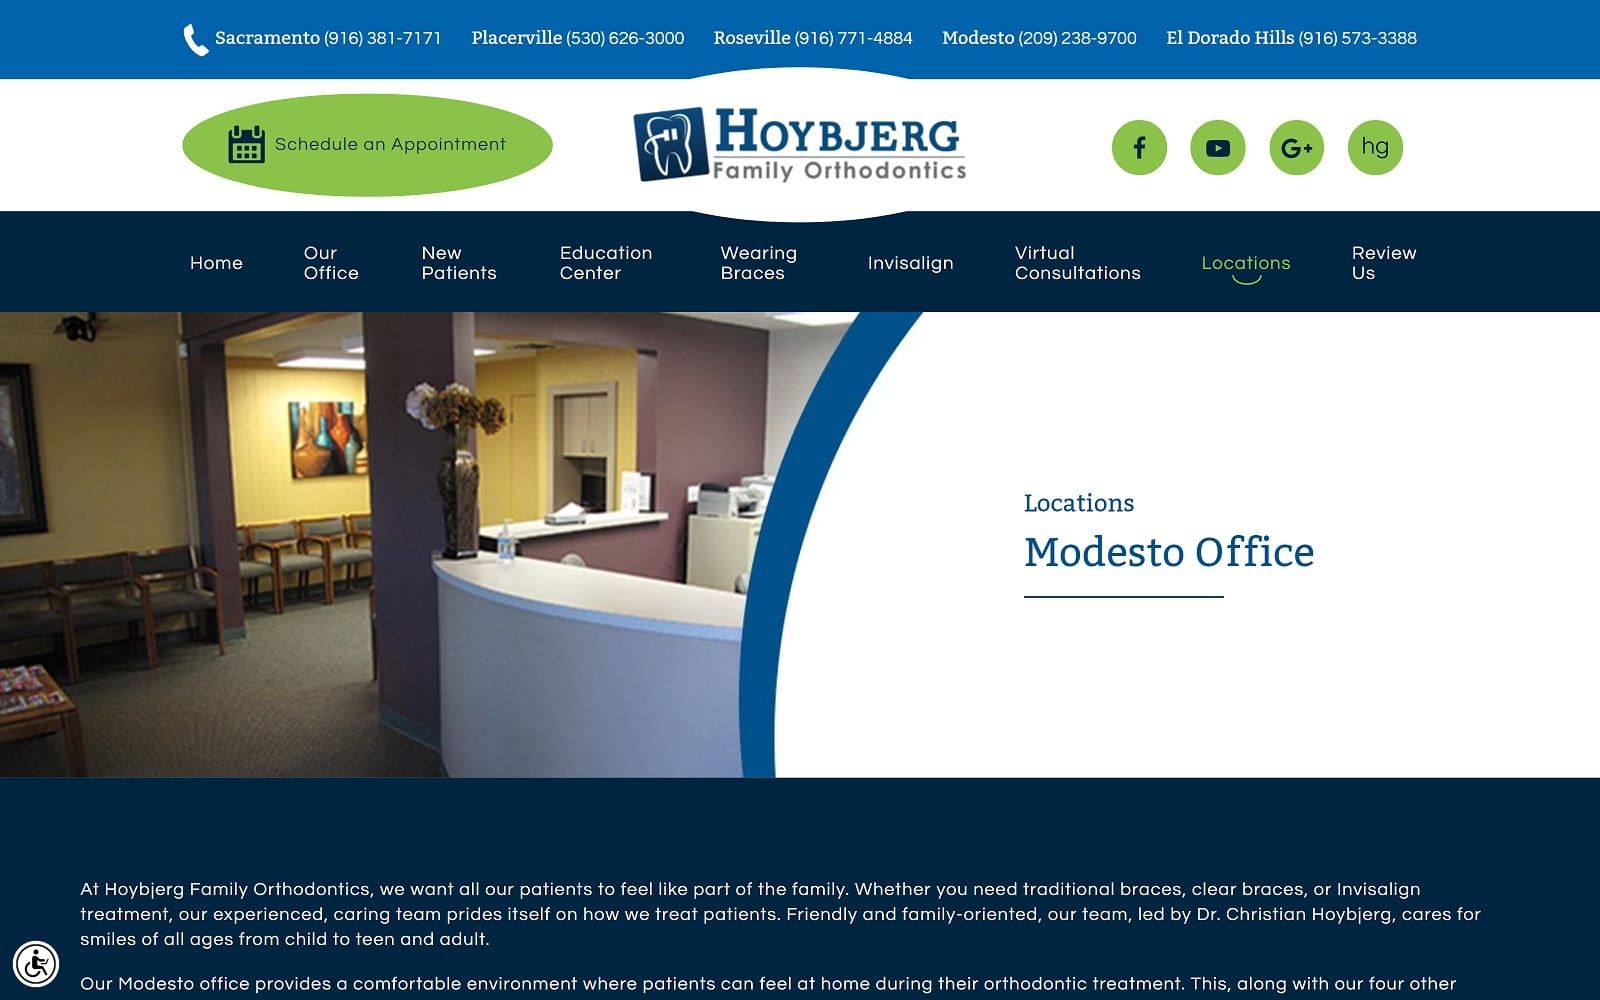 The screenshot of hoybjerg family orthodontics hfamilybraces. Com dr. Christian hoybjerg website